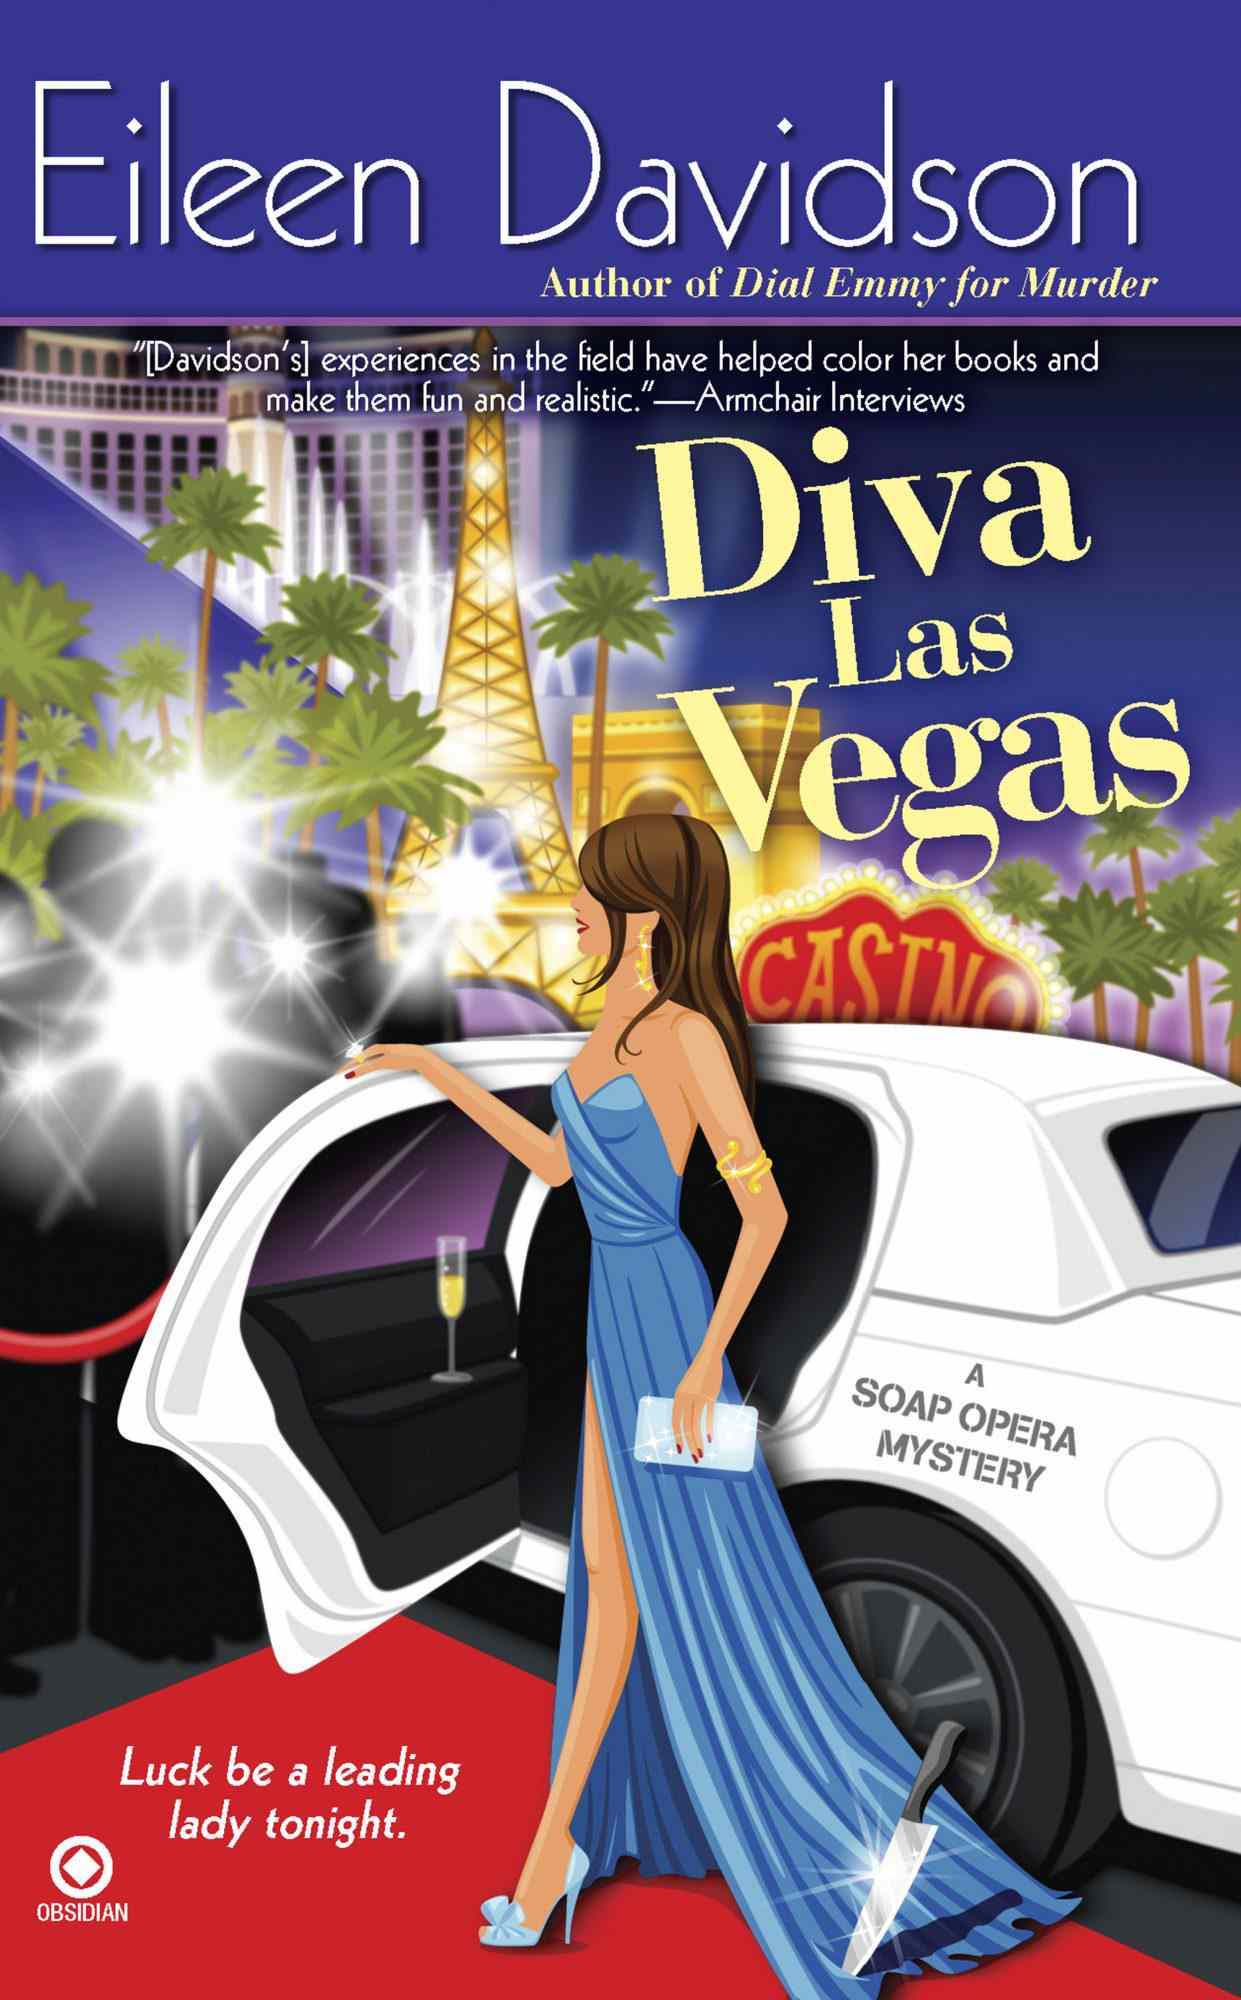 Diva Las Vegas: A Soap Opera Mystery, by Eileen Davidson